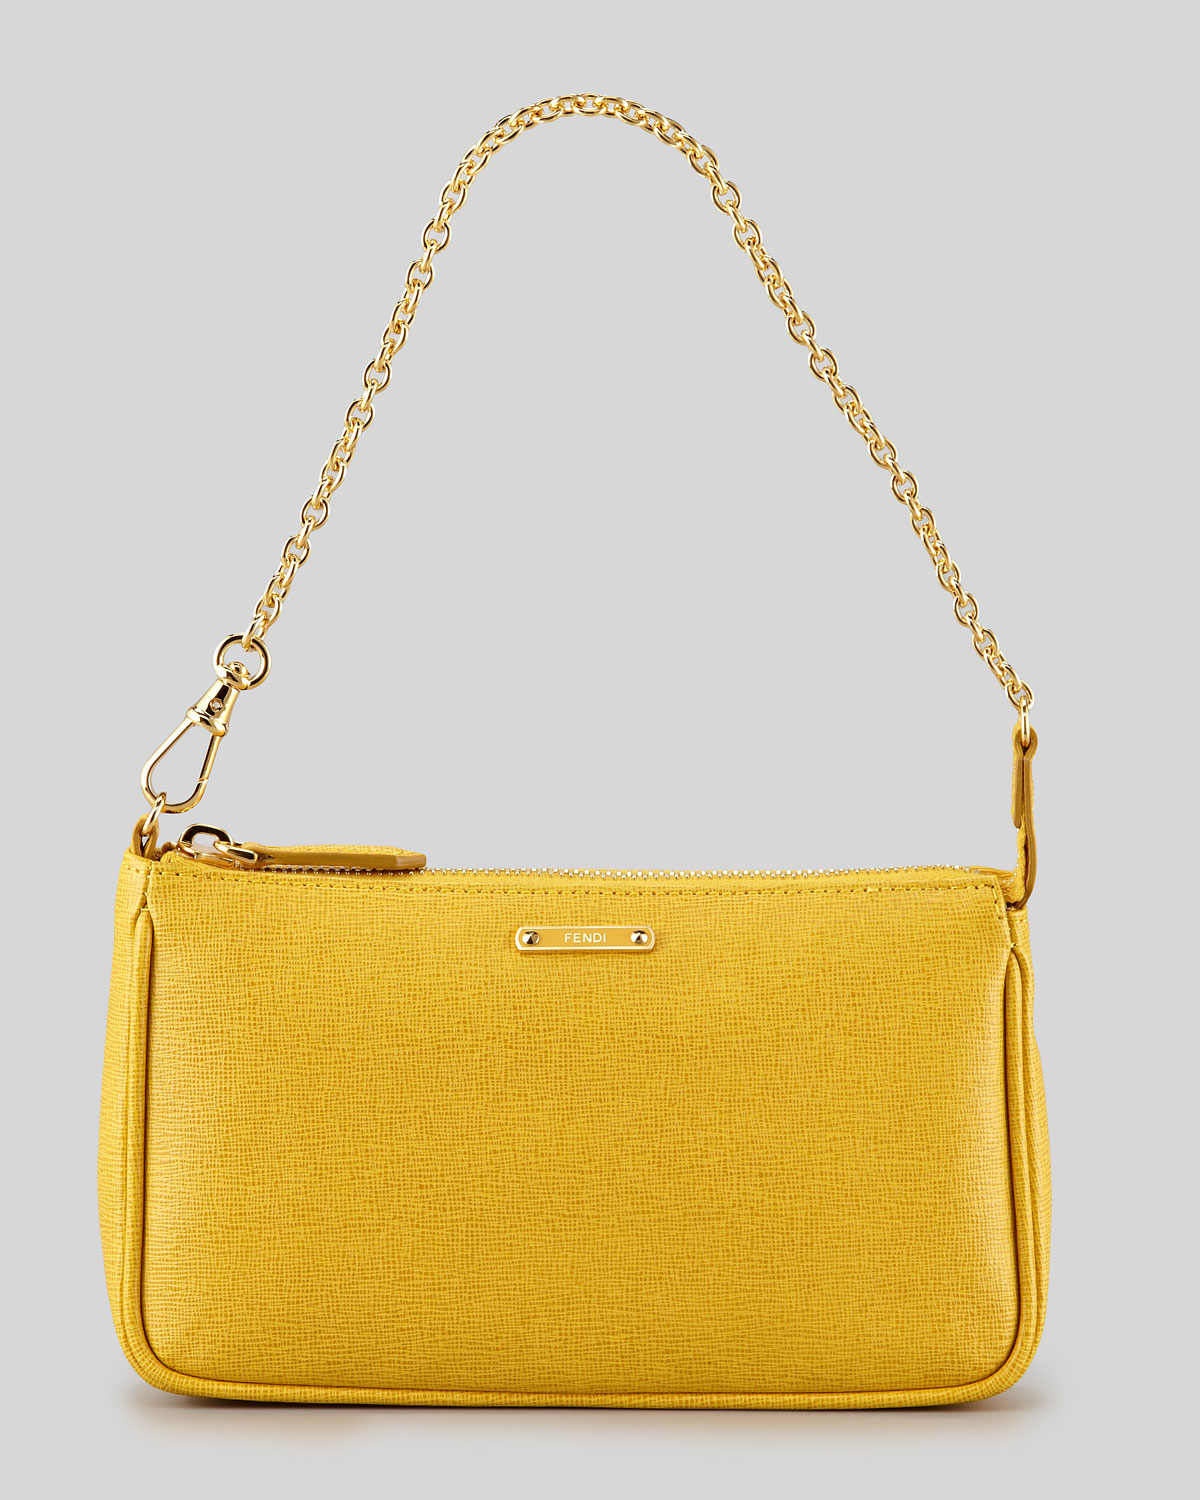 Fendi Mini Chain Strap Pochette Bag in Yellow - Lyst